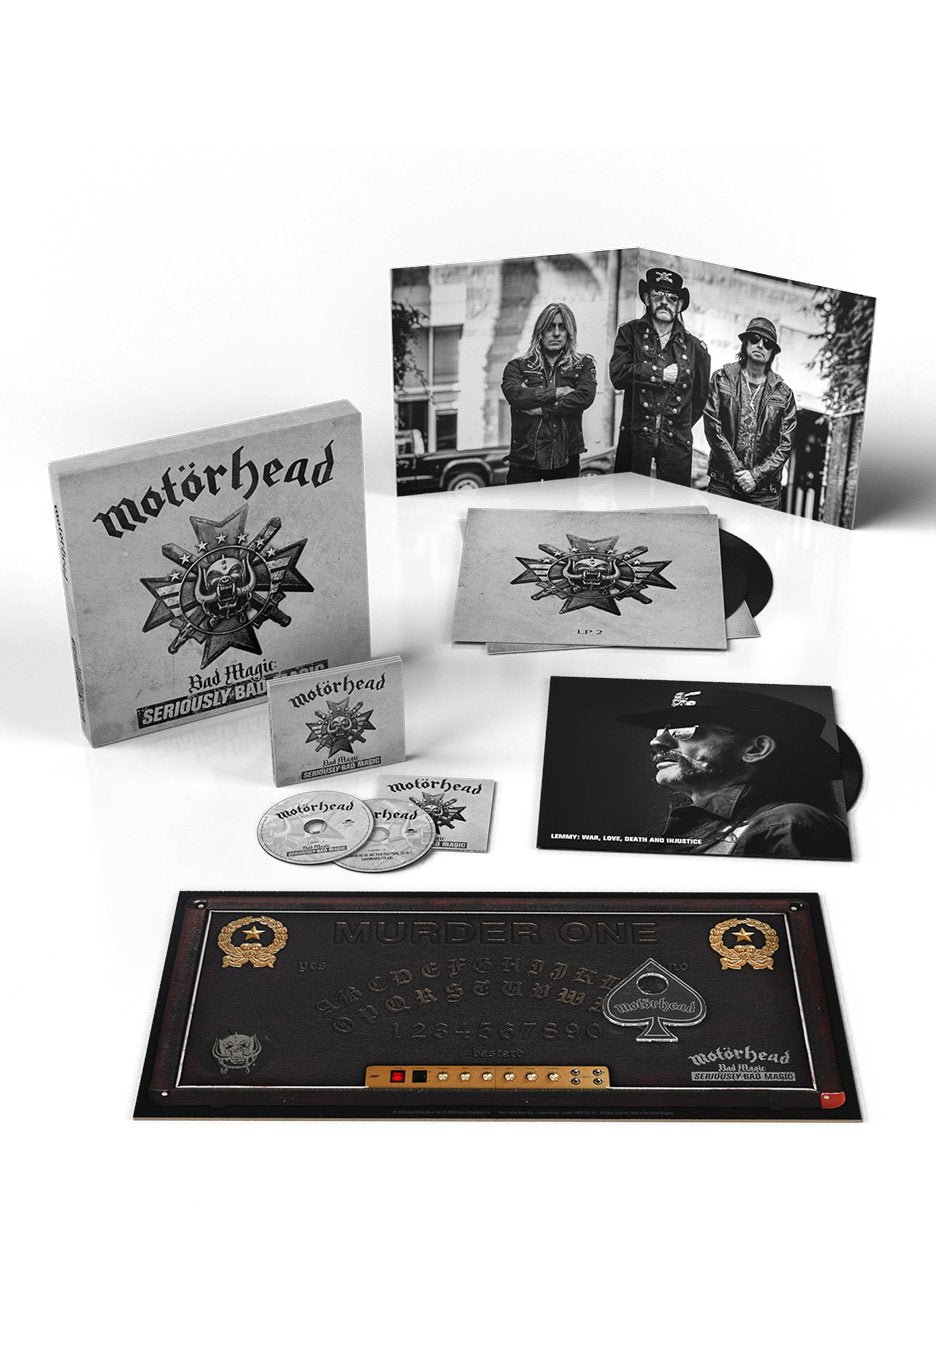 Motörhead - Bad Magic: SERIOUSLY BAD MAGIC Limited Edition - Box Set